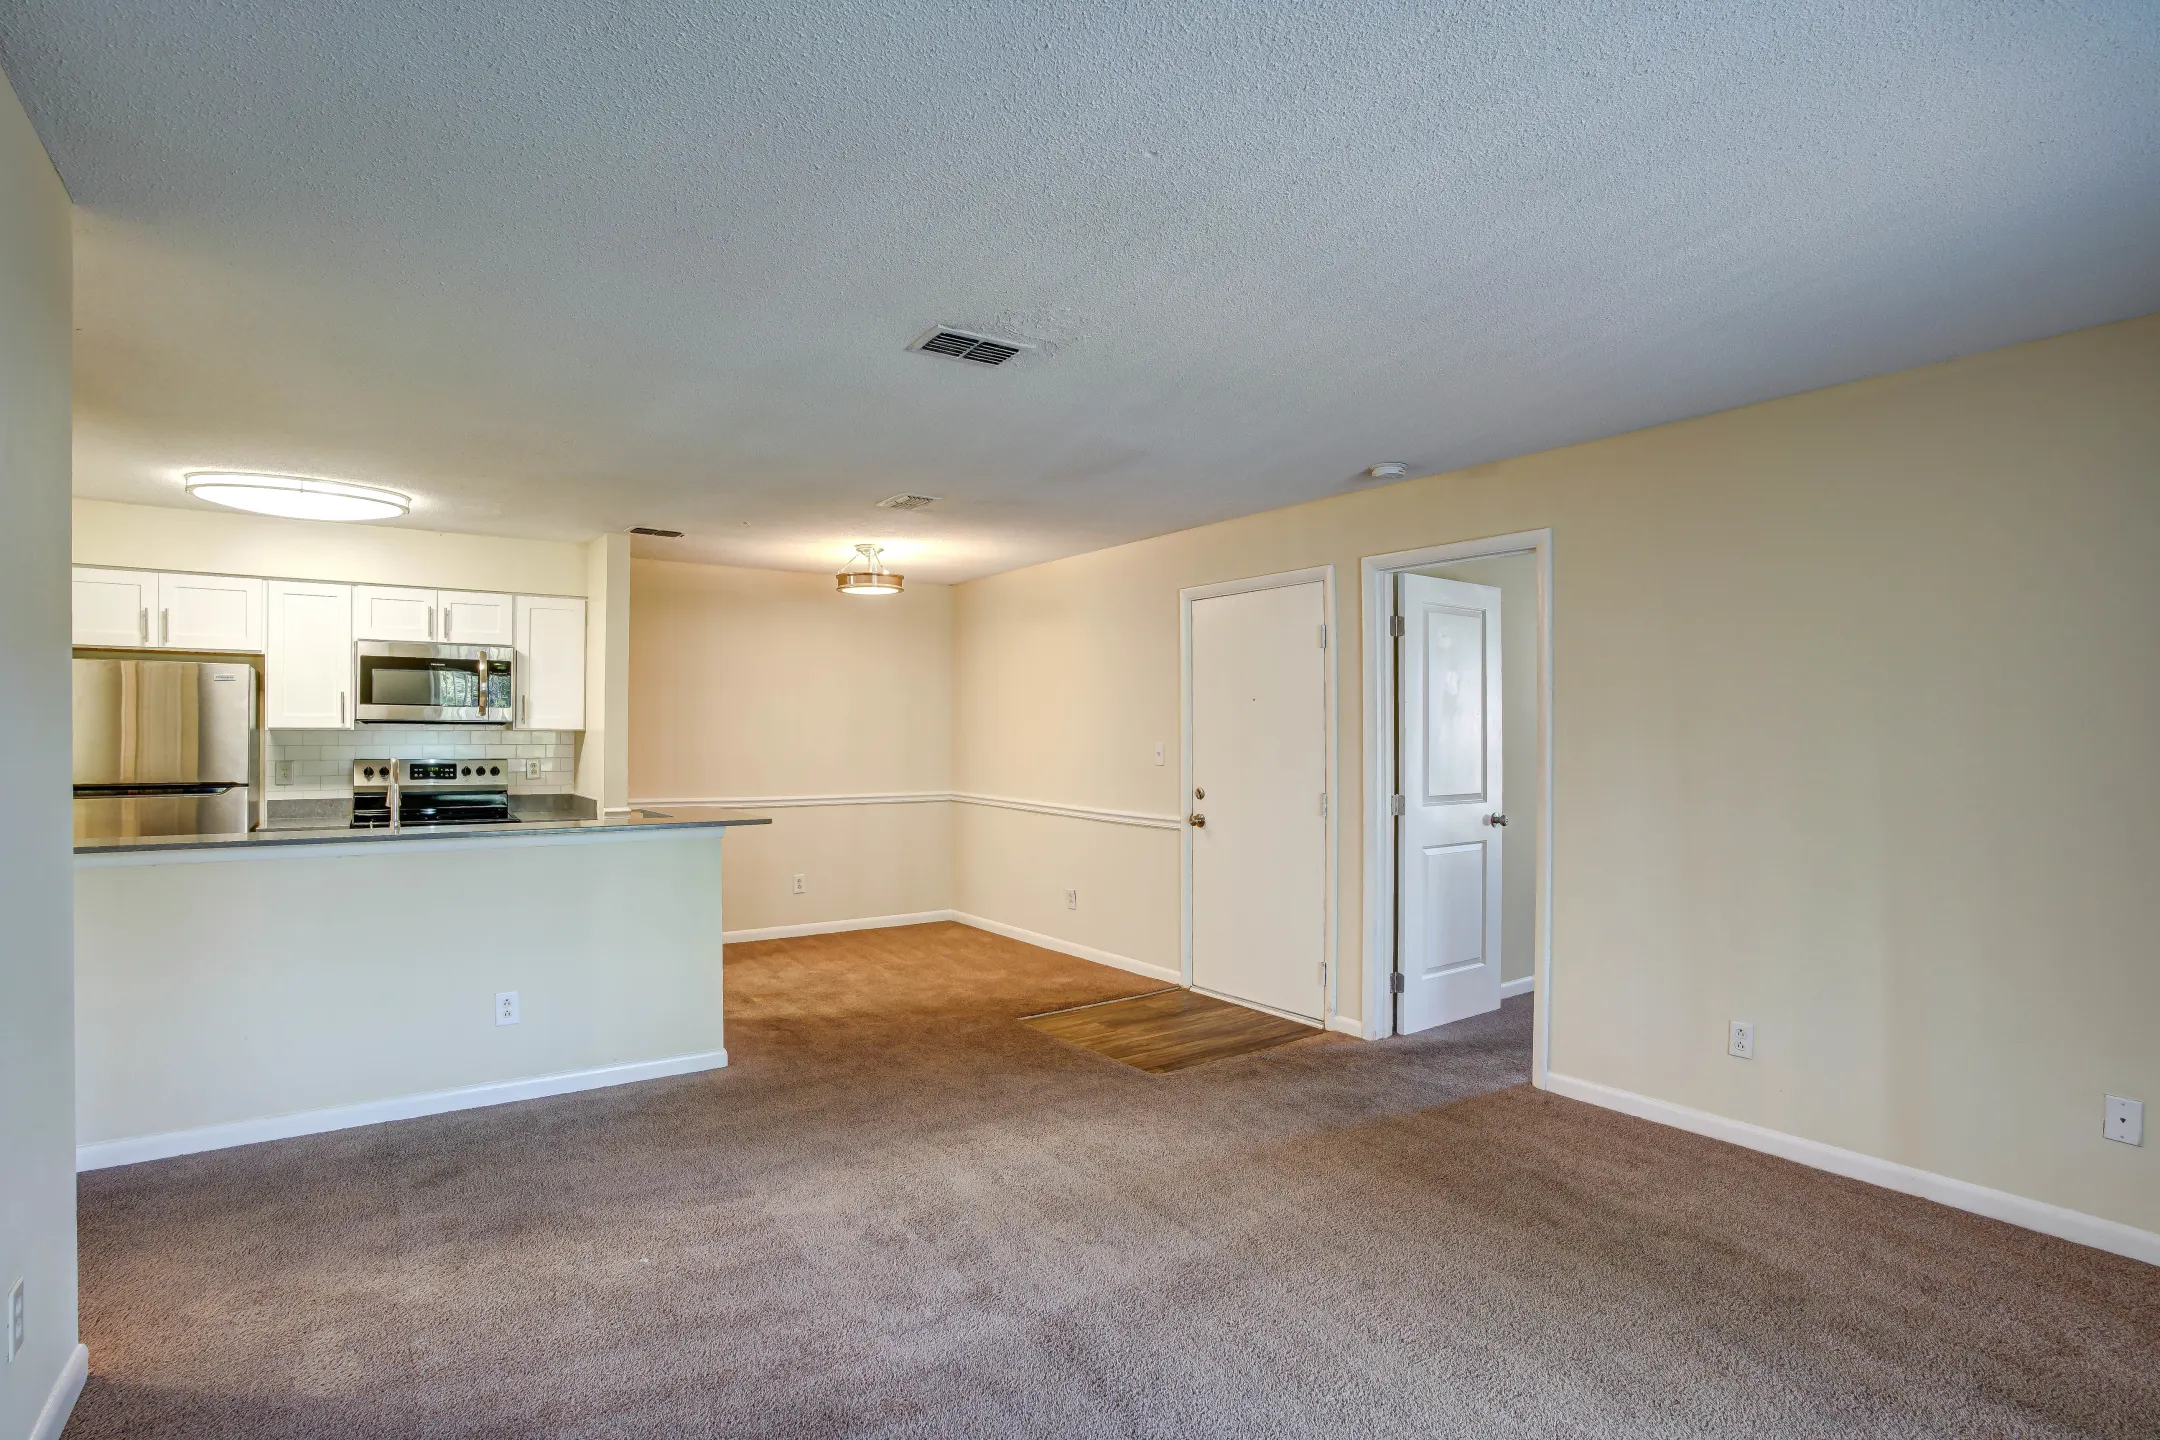 Living Room - Bluff Ridge Apartment Homes - Jacksonville, NC